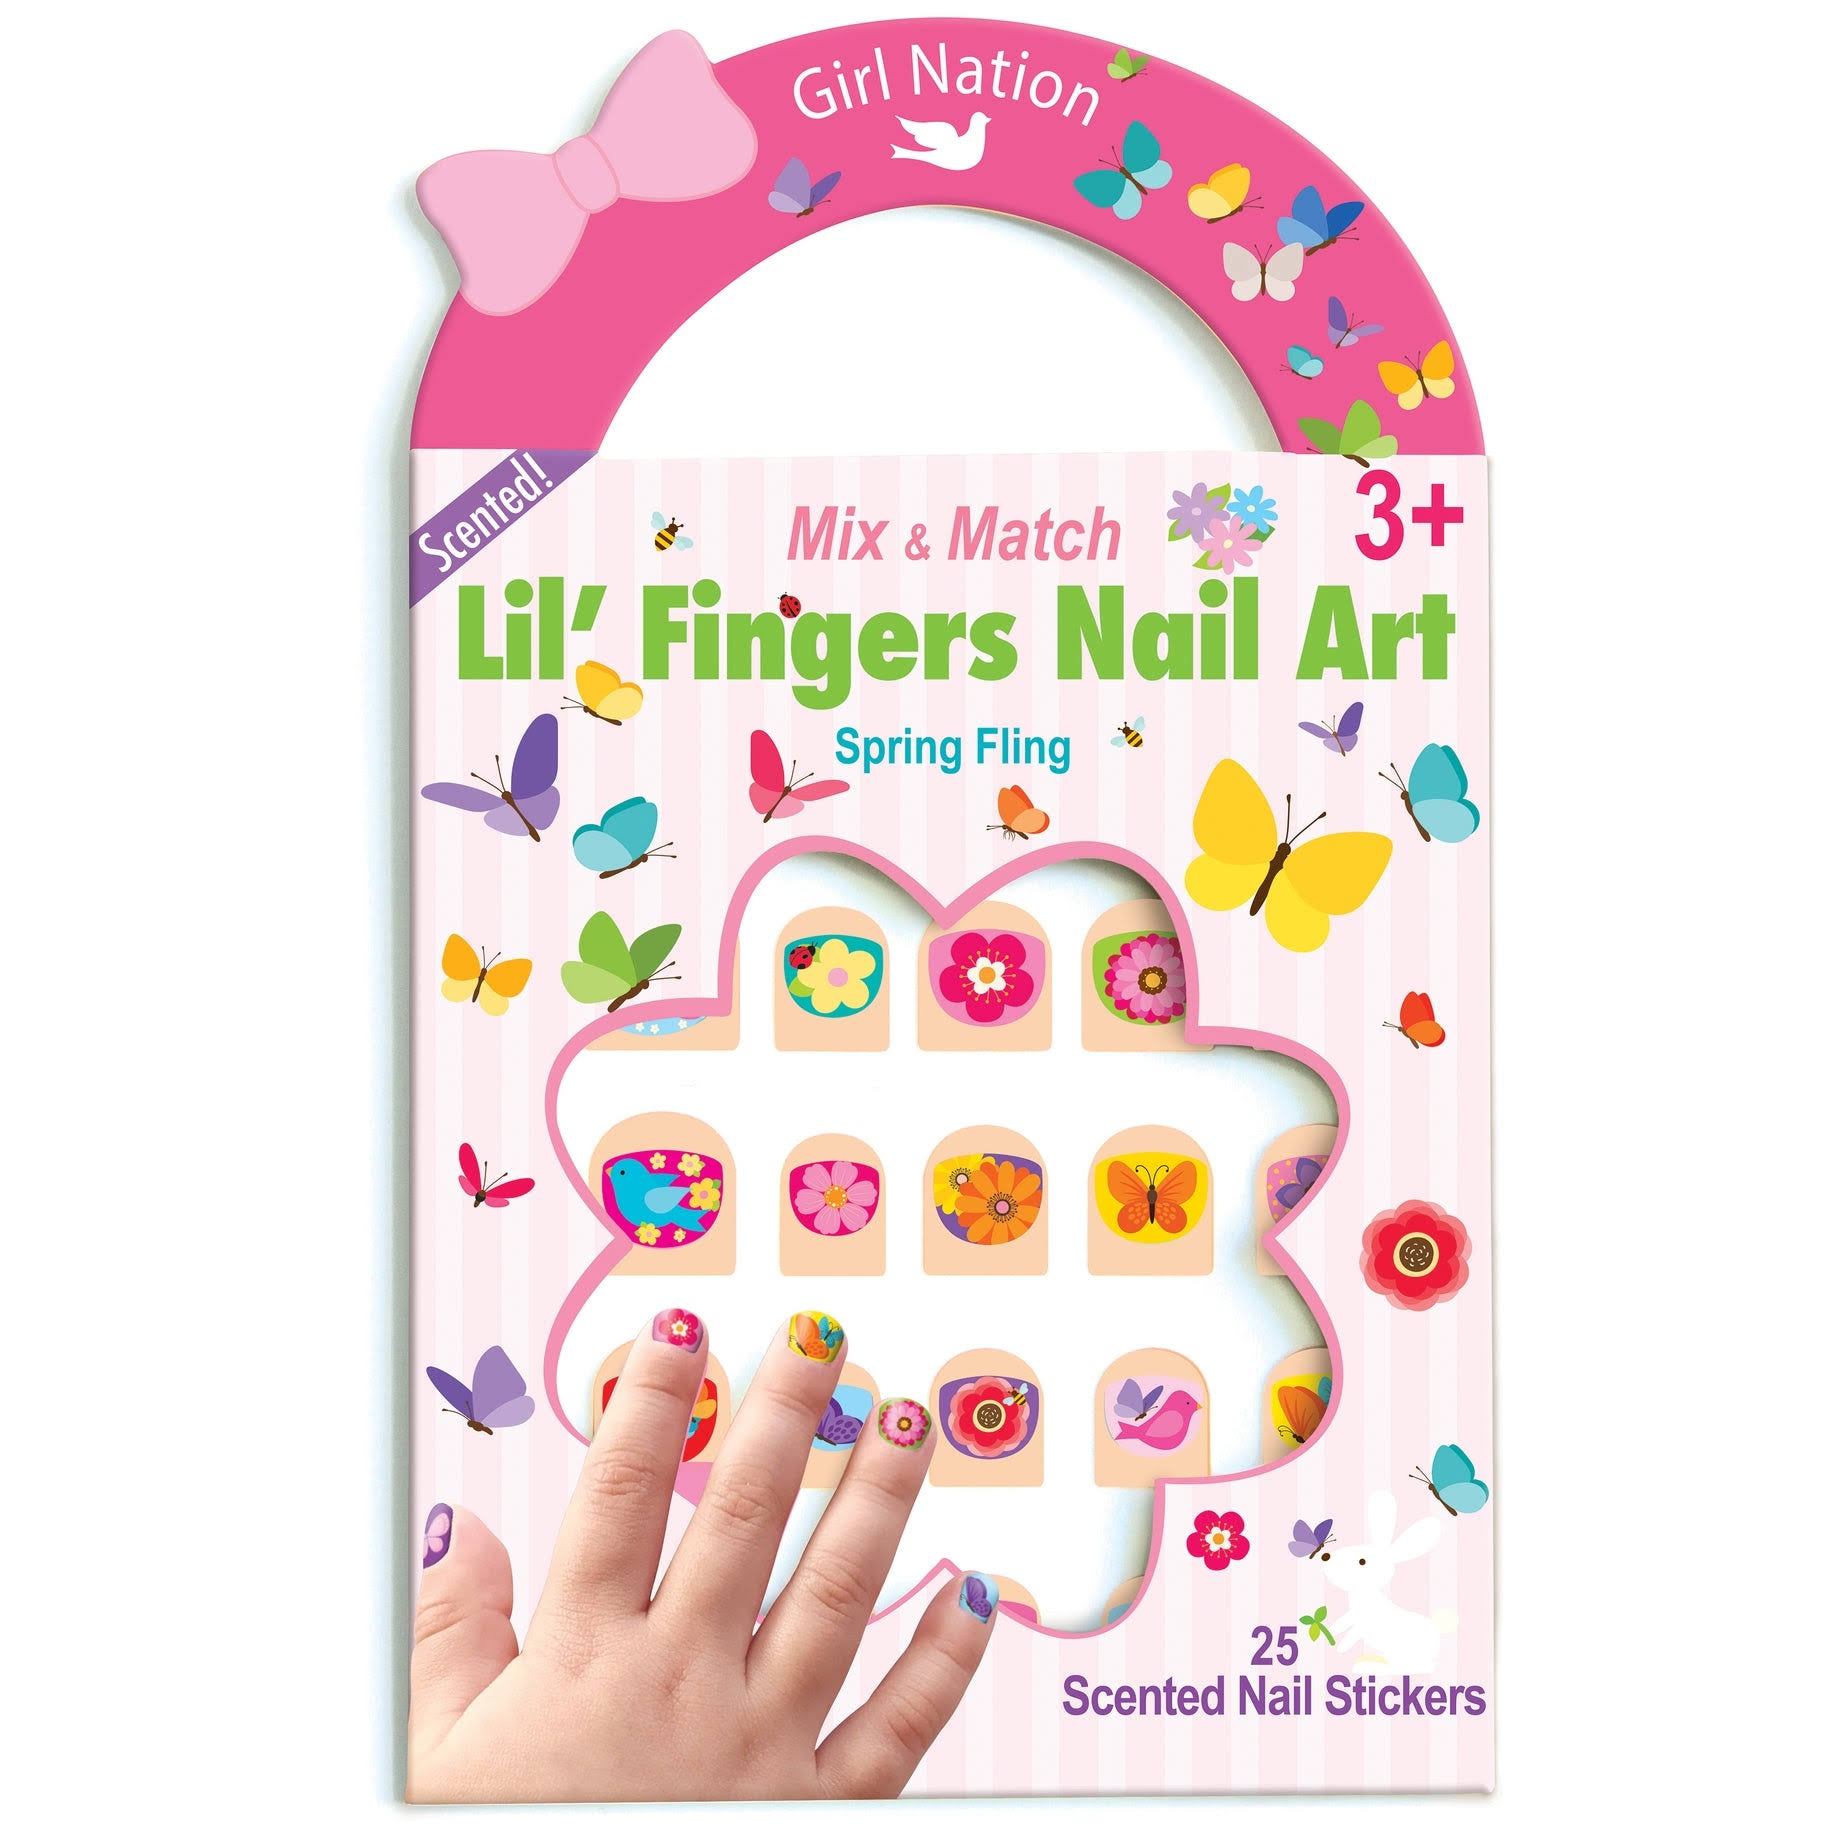 Lil’ Fingers Nail Art Spring Fling